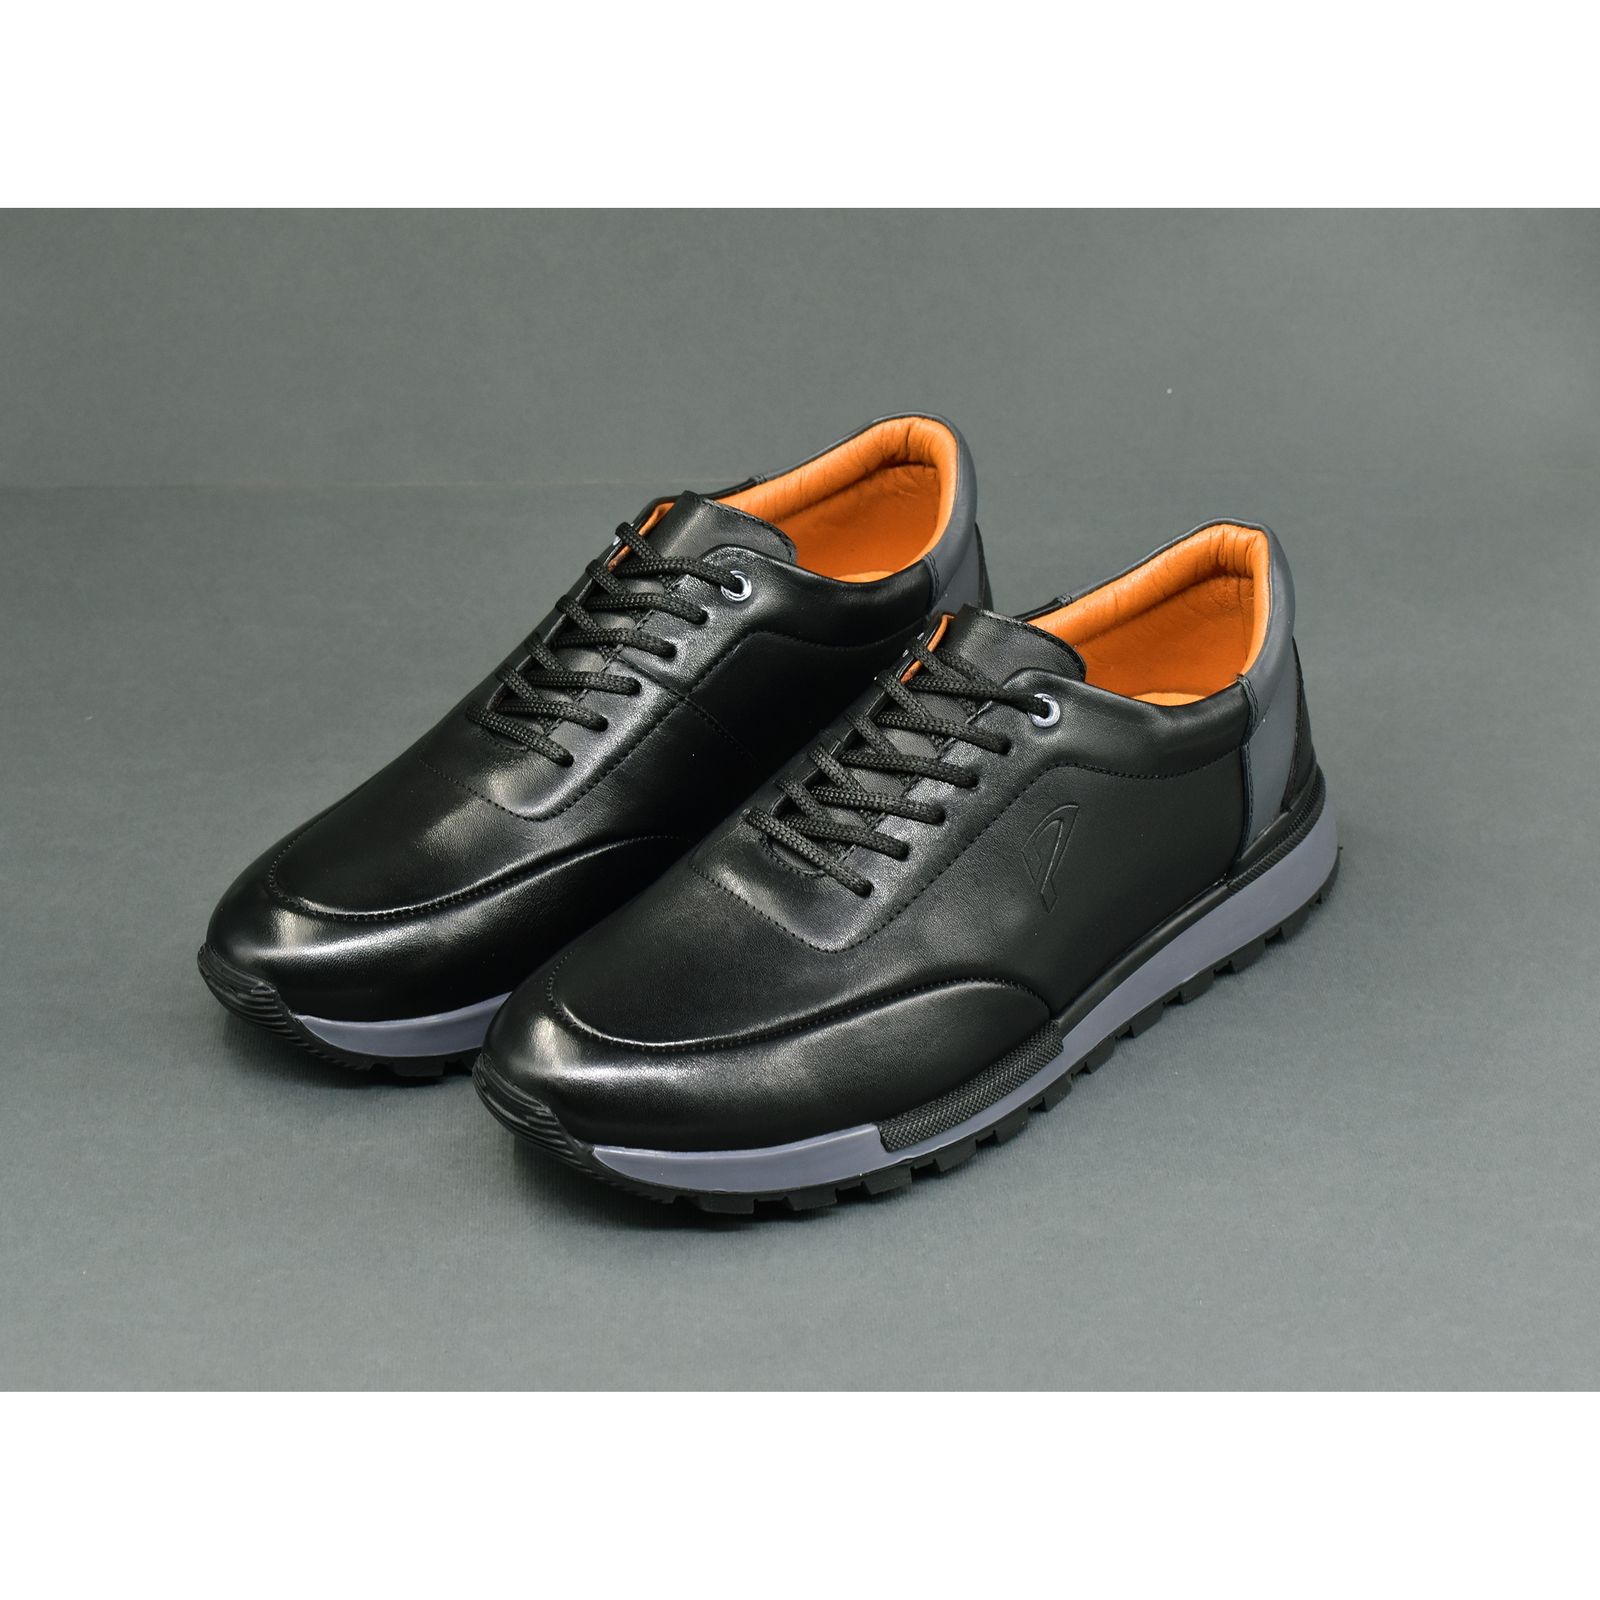 کفش روزمره مردانه پاما مدل ME-680 کد G1807 -  - 3